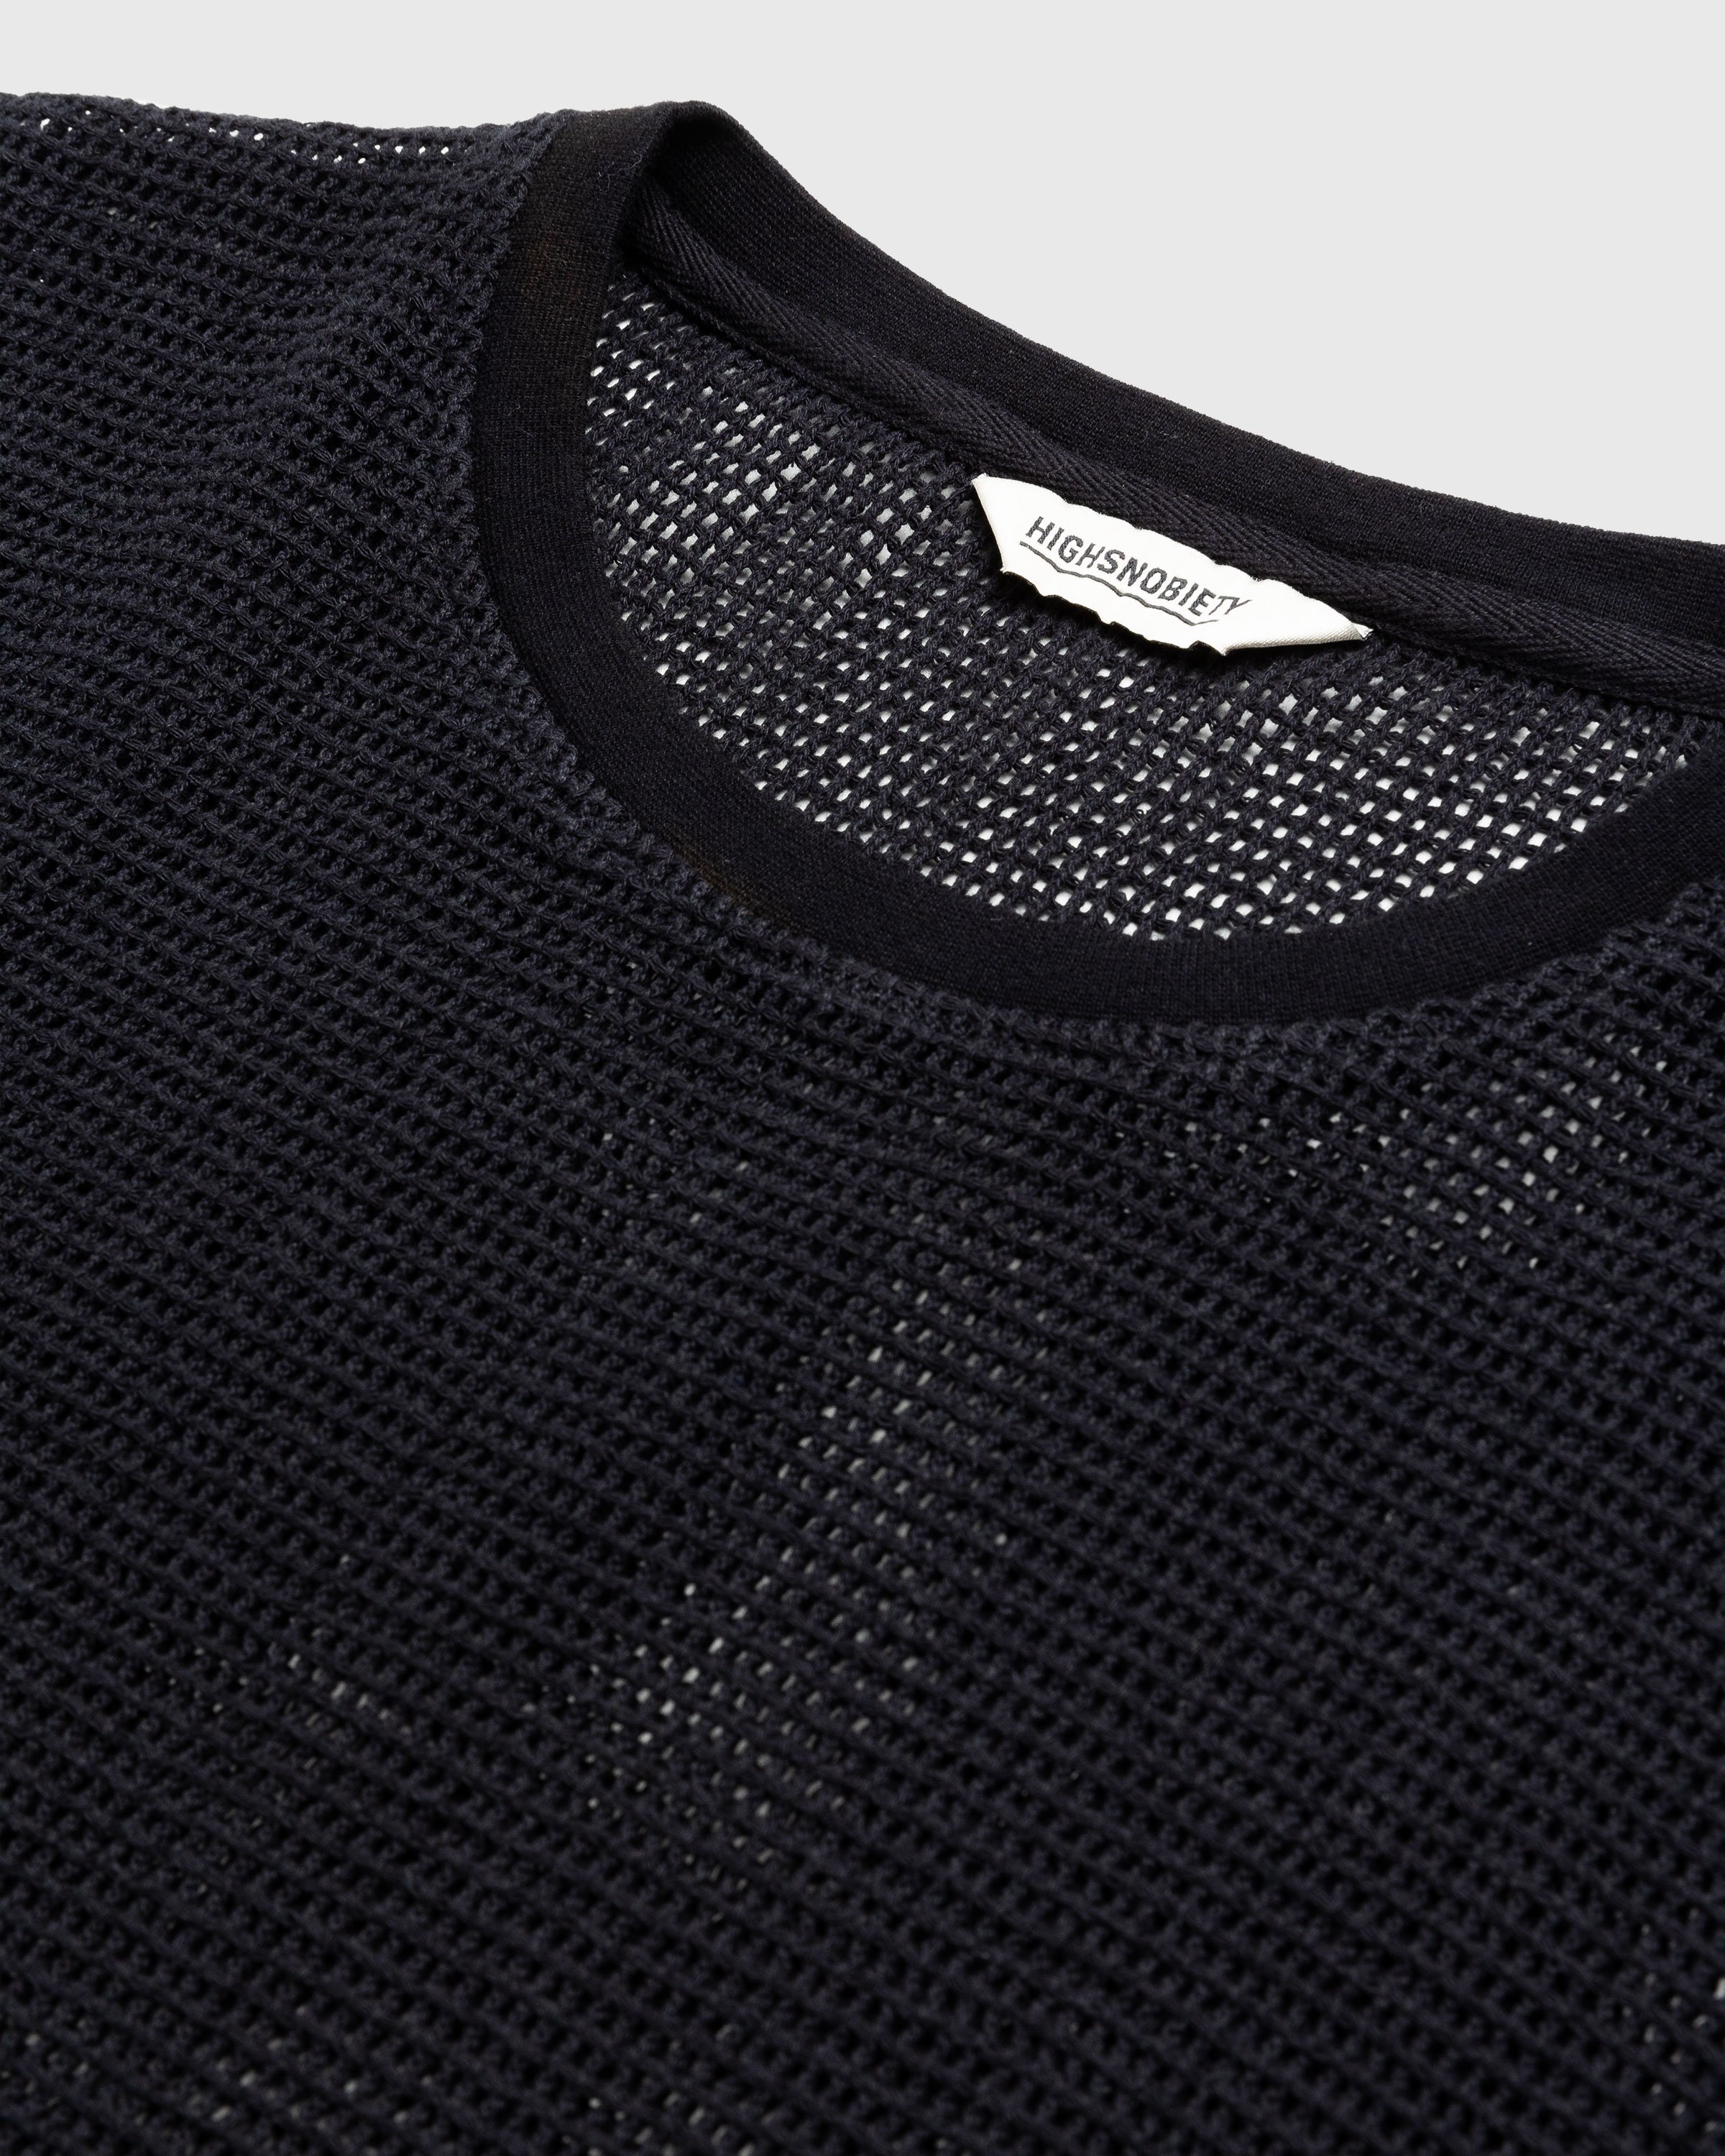 Highsnobiety - Cotton Mesh Knit T-Shirt Black - Clothing - Black - Image 6